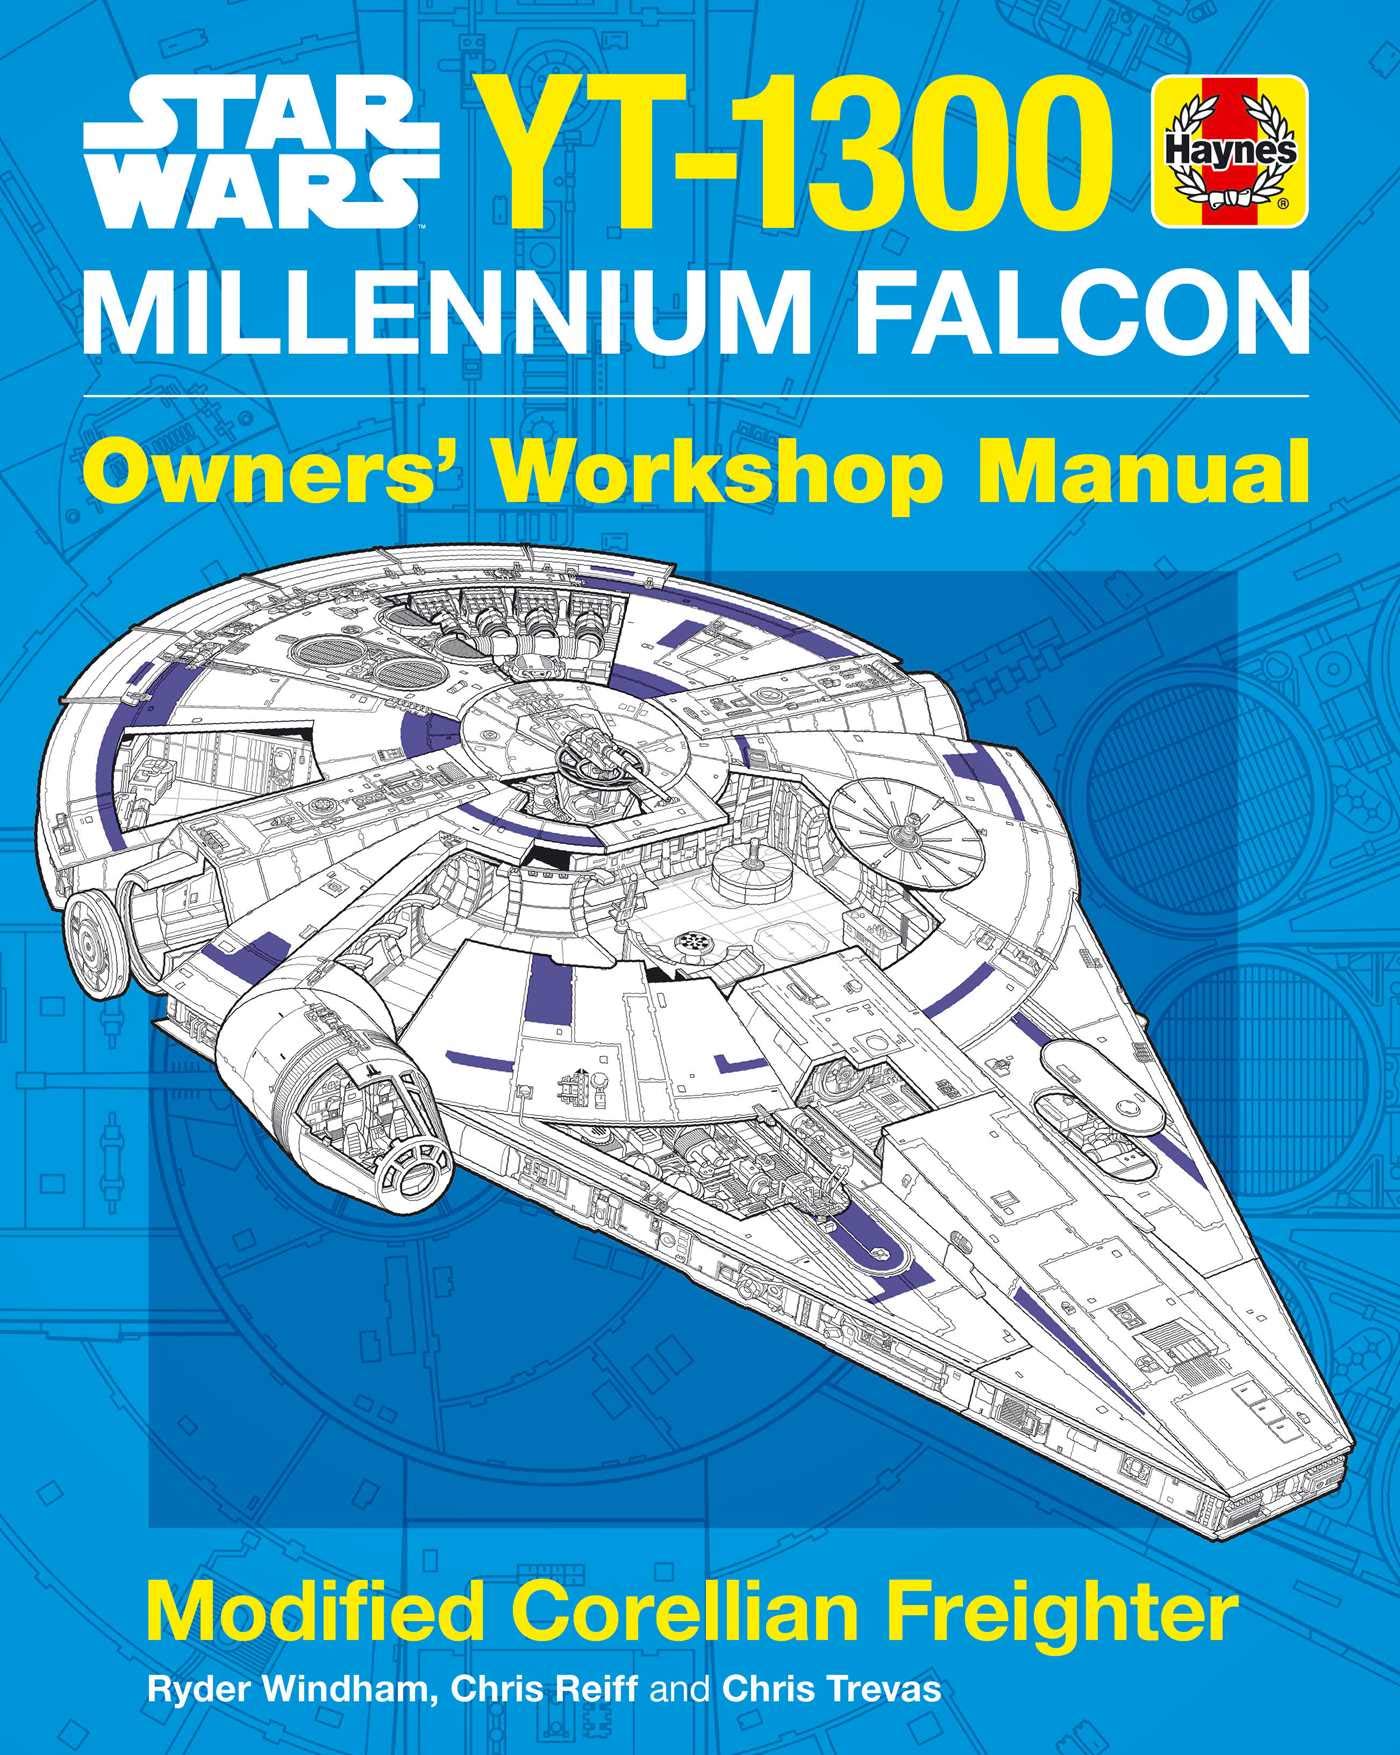 star wars owner's manuals millennium falcon